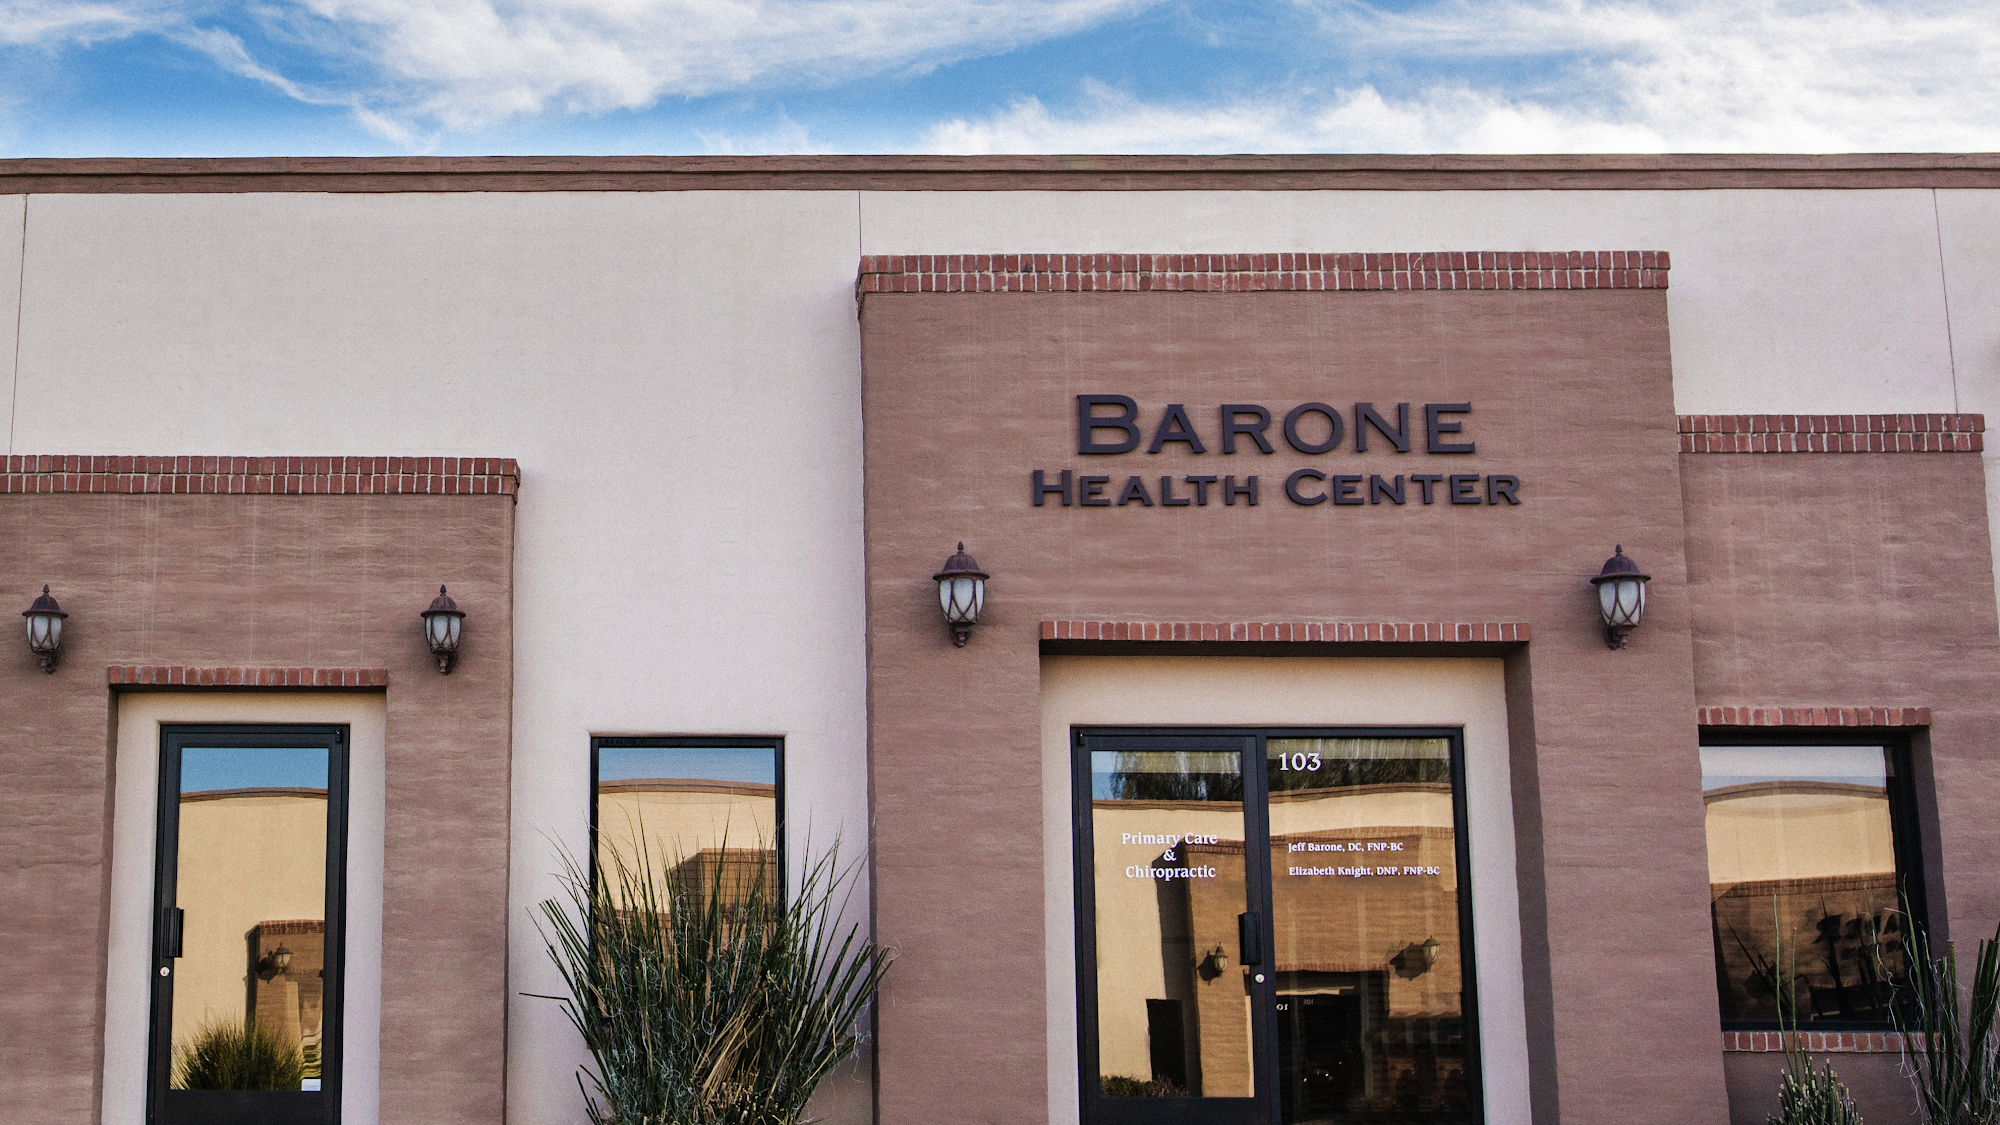 Barone Health Center